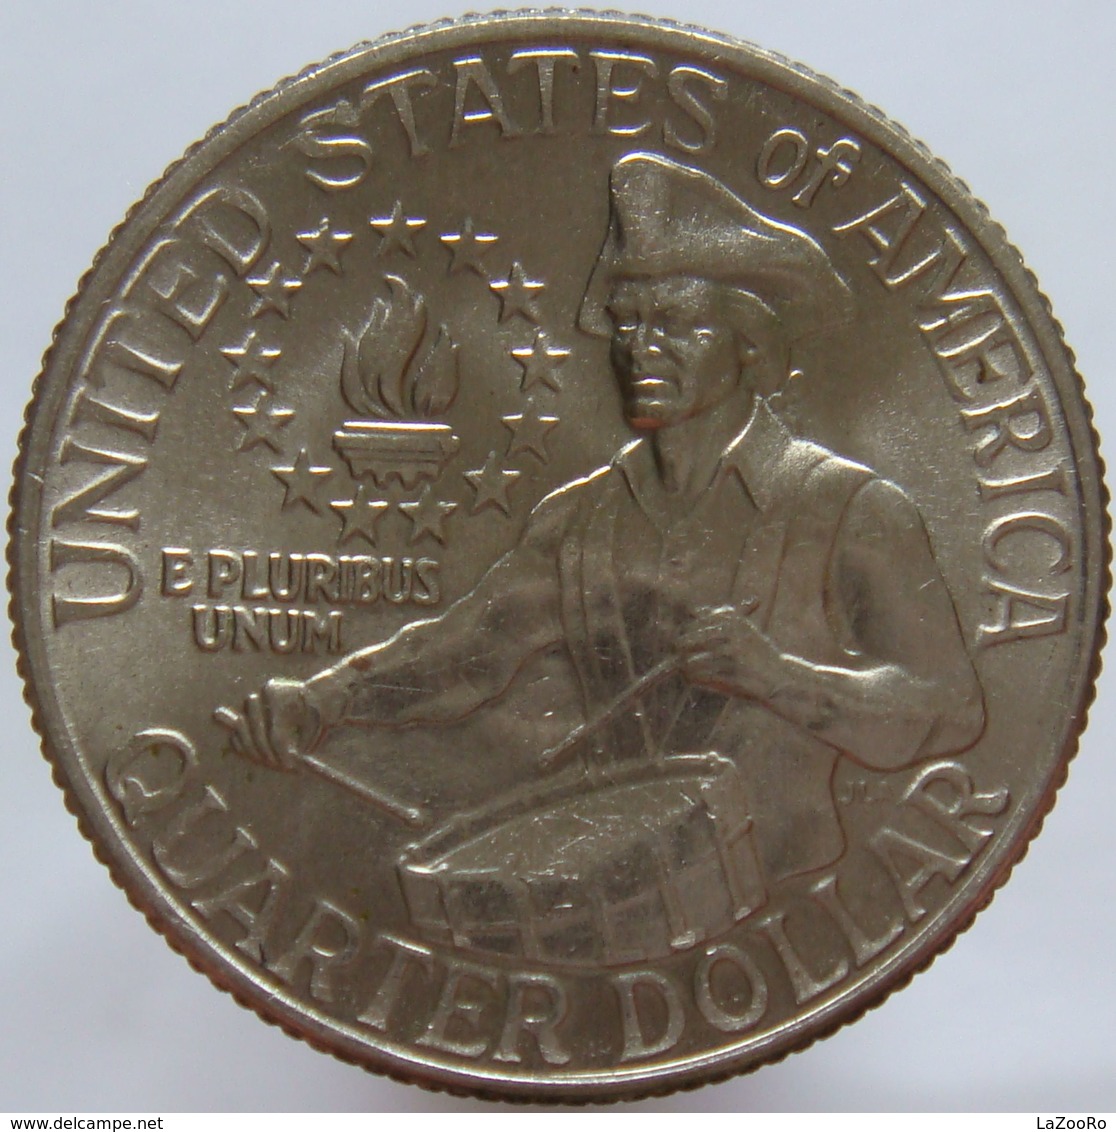 LaZooRo: United States Of America 25 Cents 1976 UNC - Gedenkmünzen